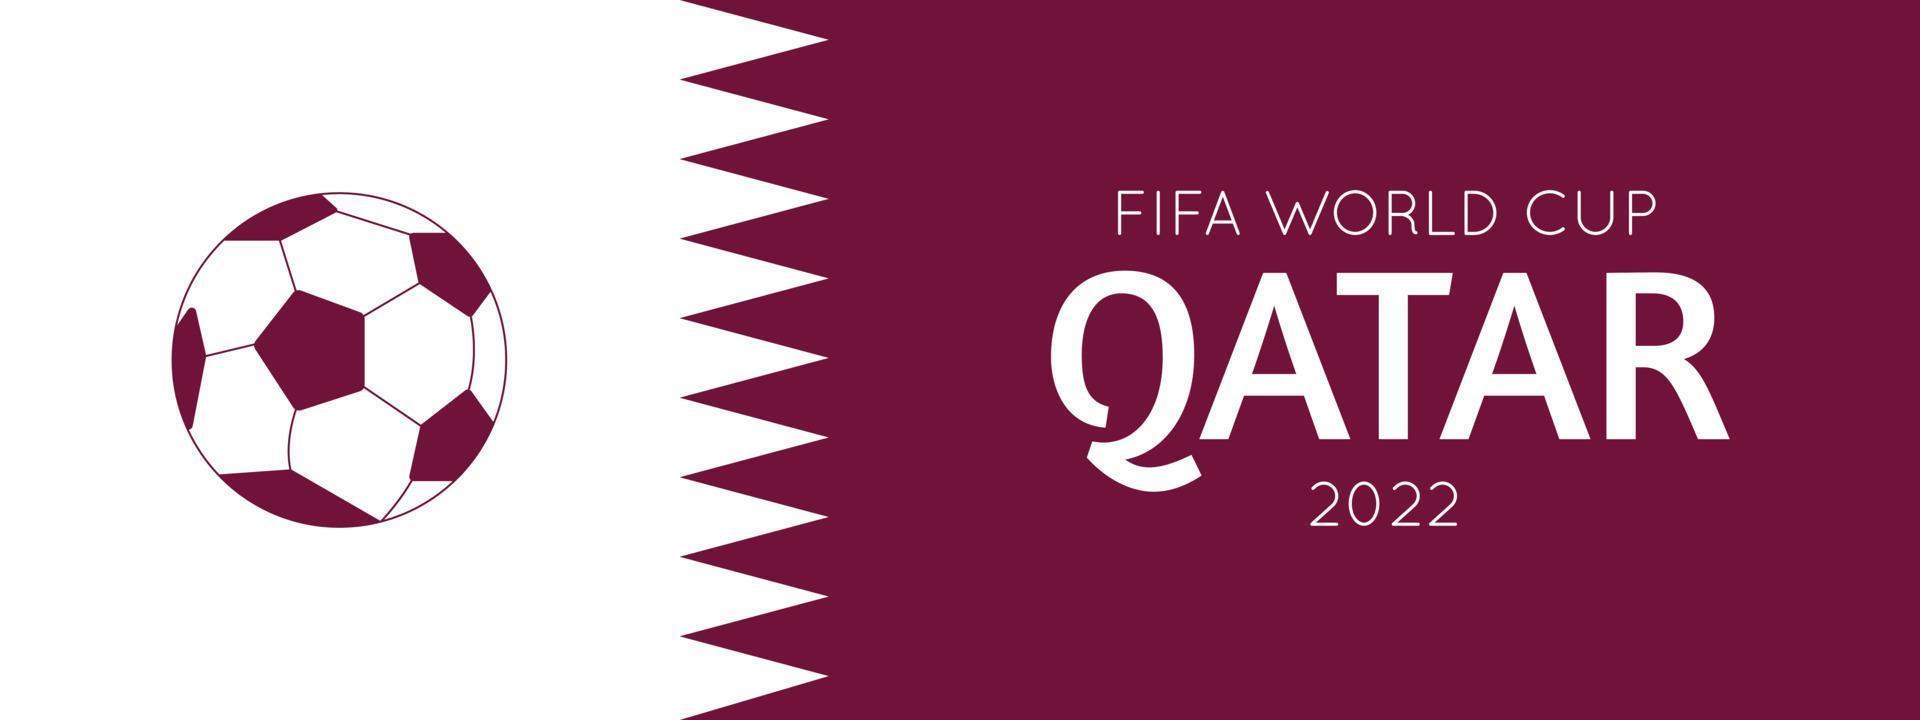 Qatar football cup 2022. World football championship. Flat vector illustration